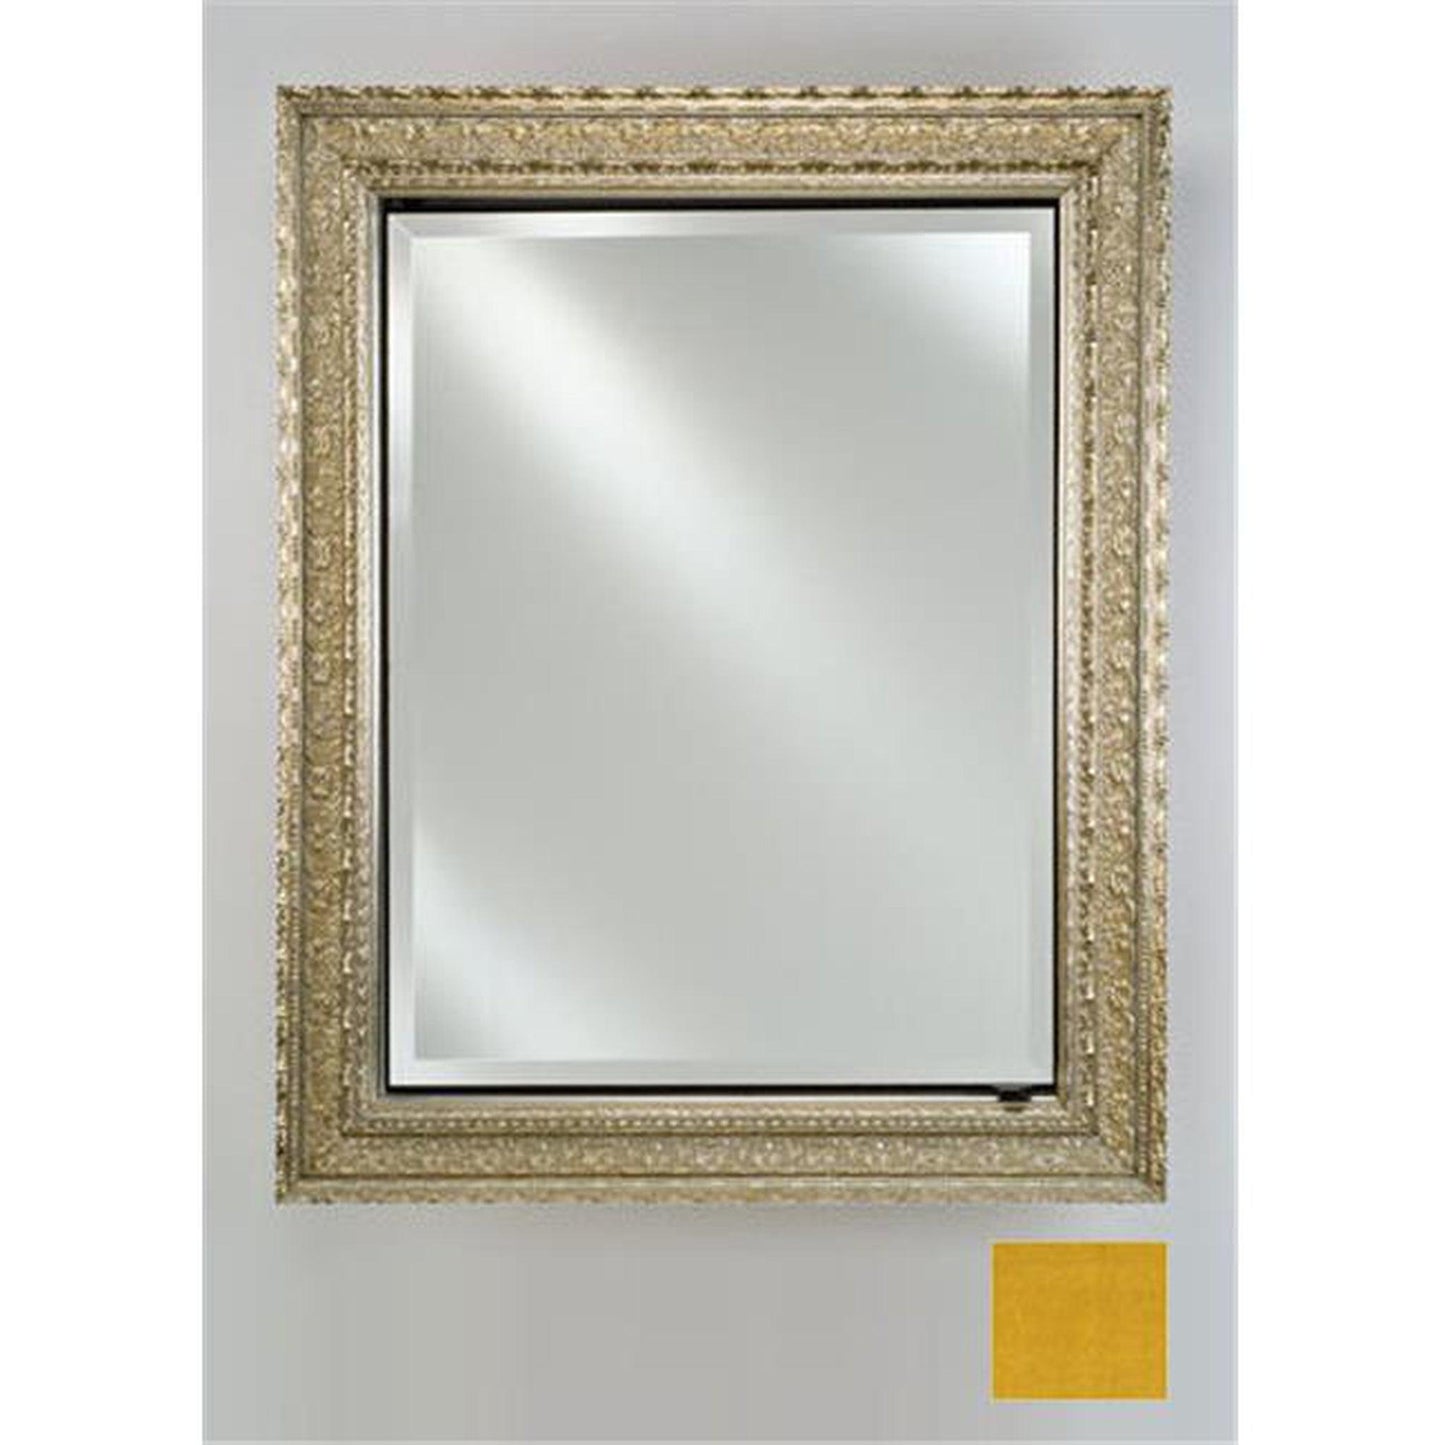 Afina Signature 20" x 26" Colorgrain Yellow Recessed Reversible Hinged Single Door Medicine Cabinet With Beveled Edge Mirror